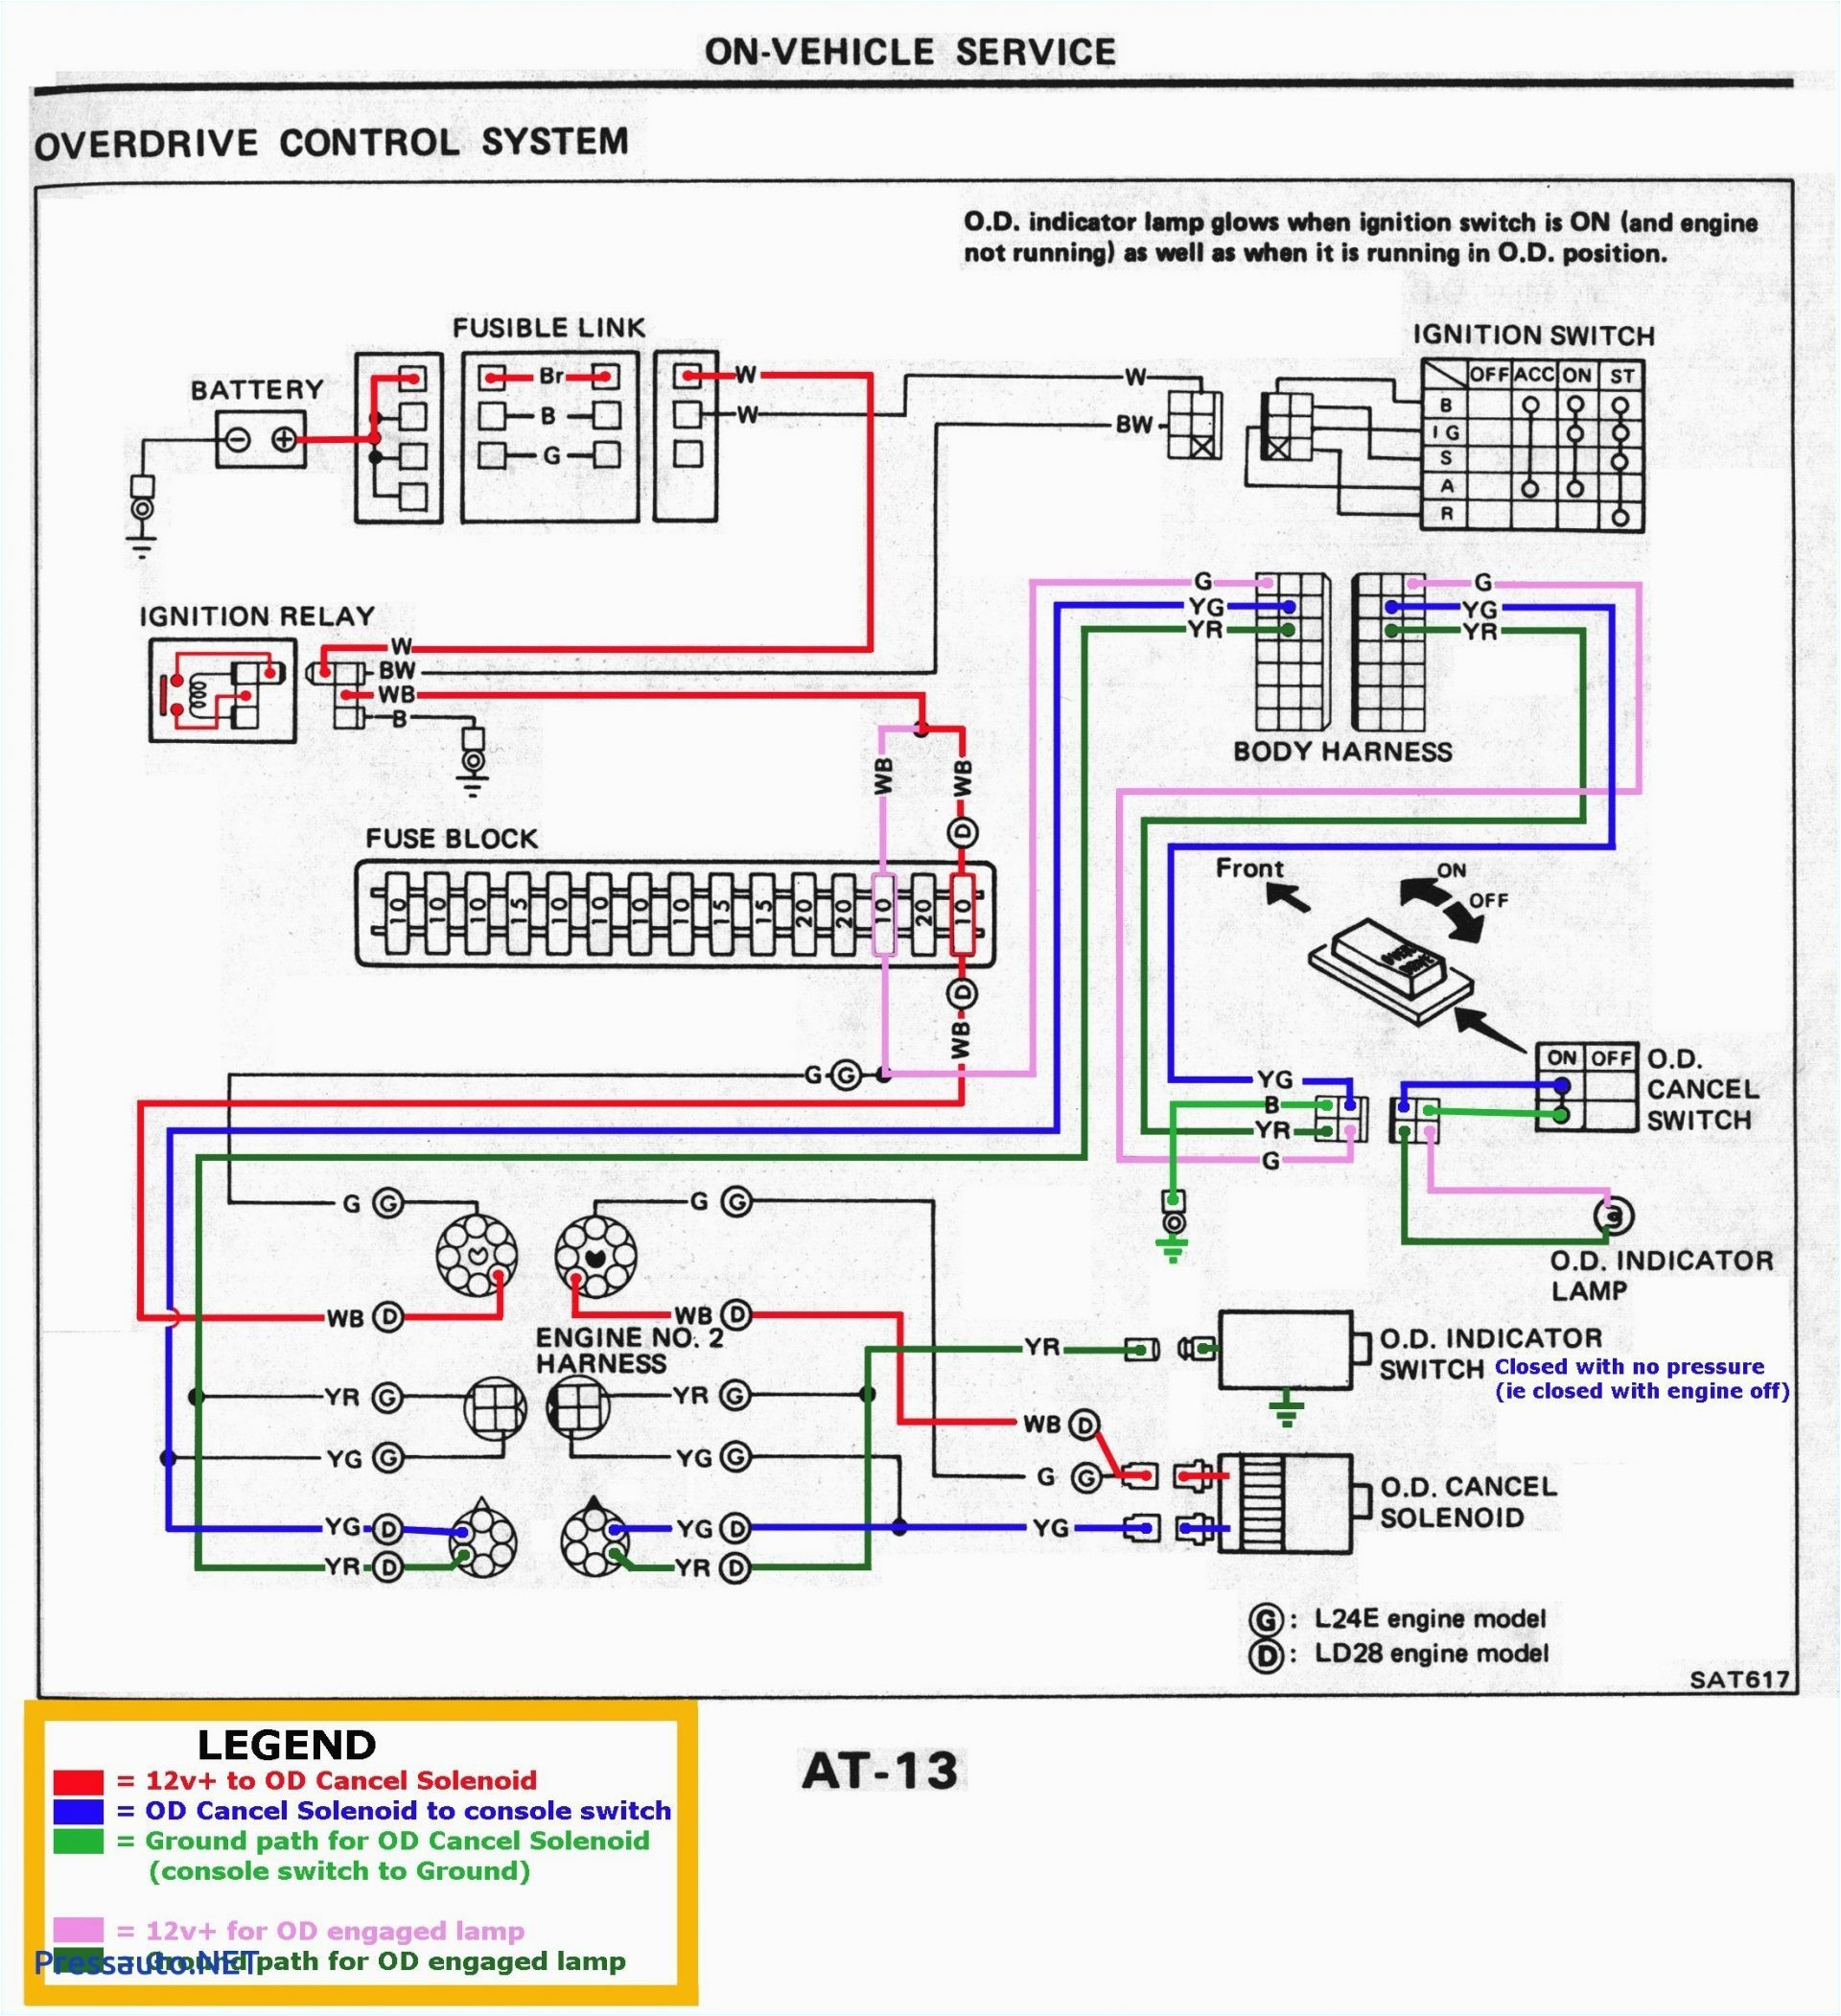 12 Volt Wiring Diagram for Lights 12 Volt Wiring Diagram Best Of Wiring Diagram for 12 Volt Lights